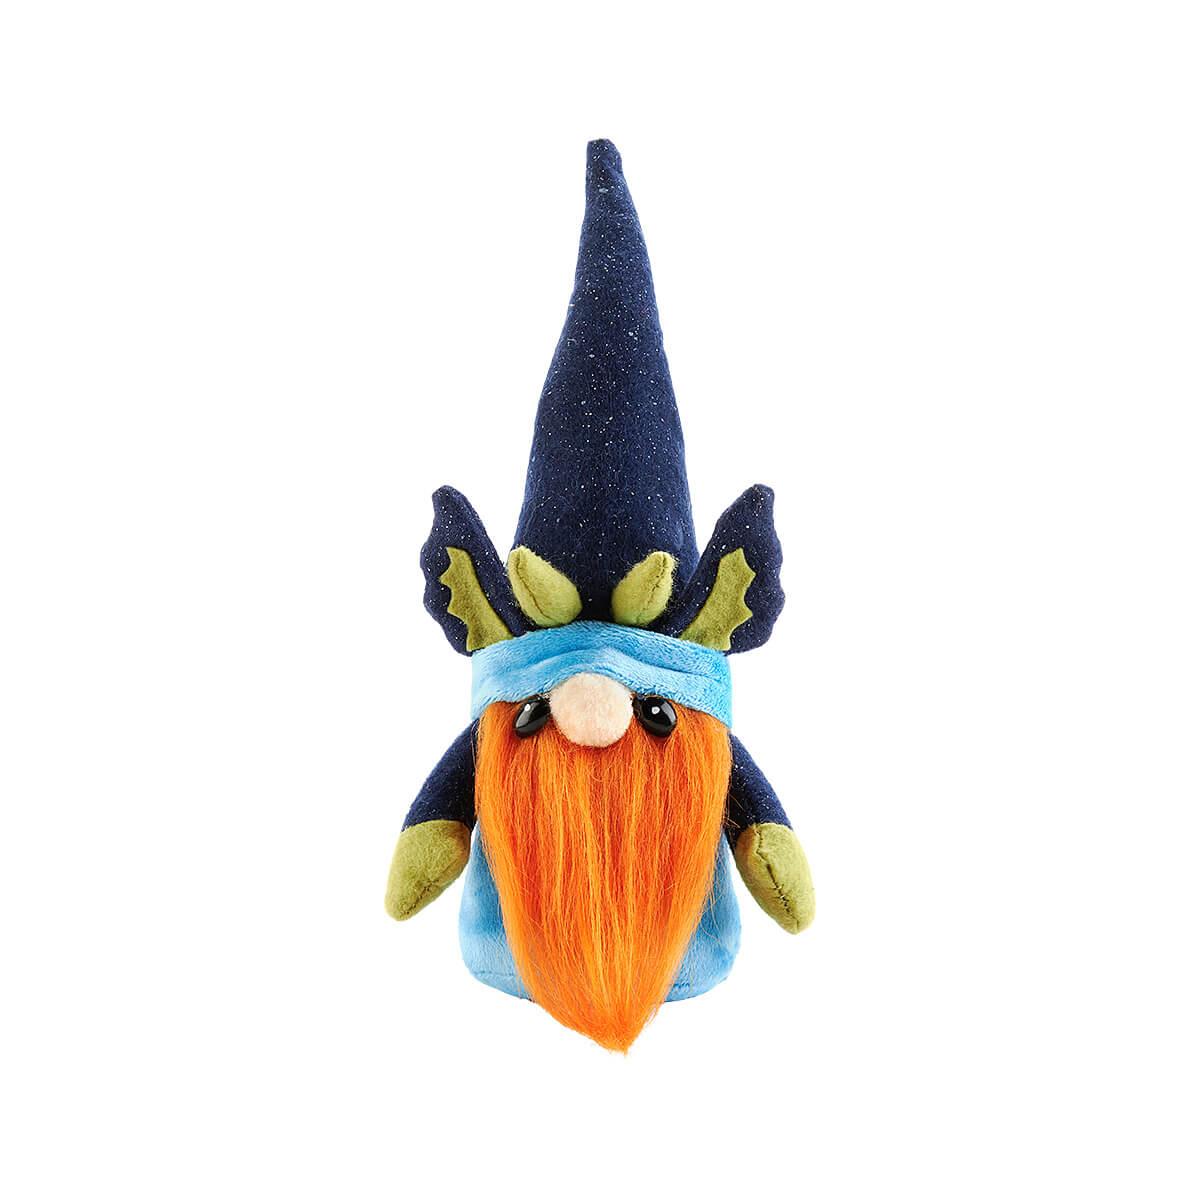  Blaze Dragon Gnome Plush Toy